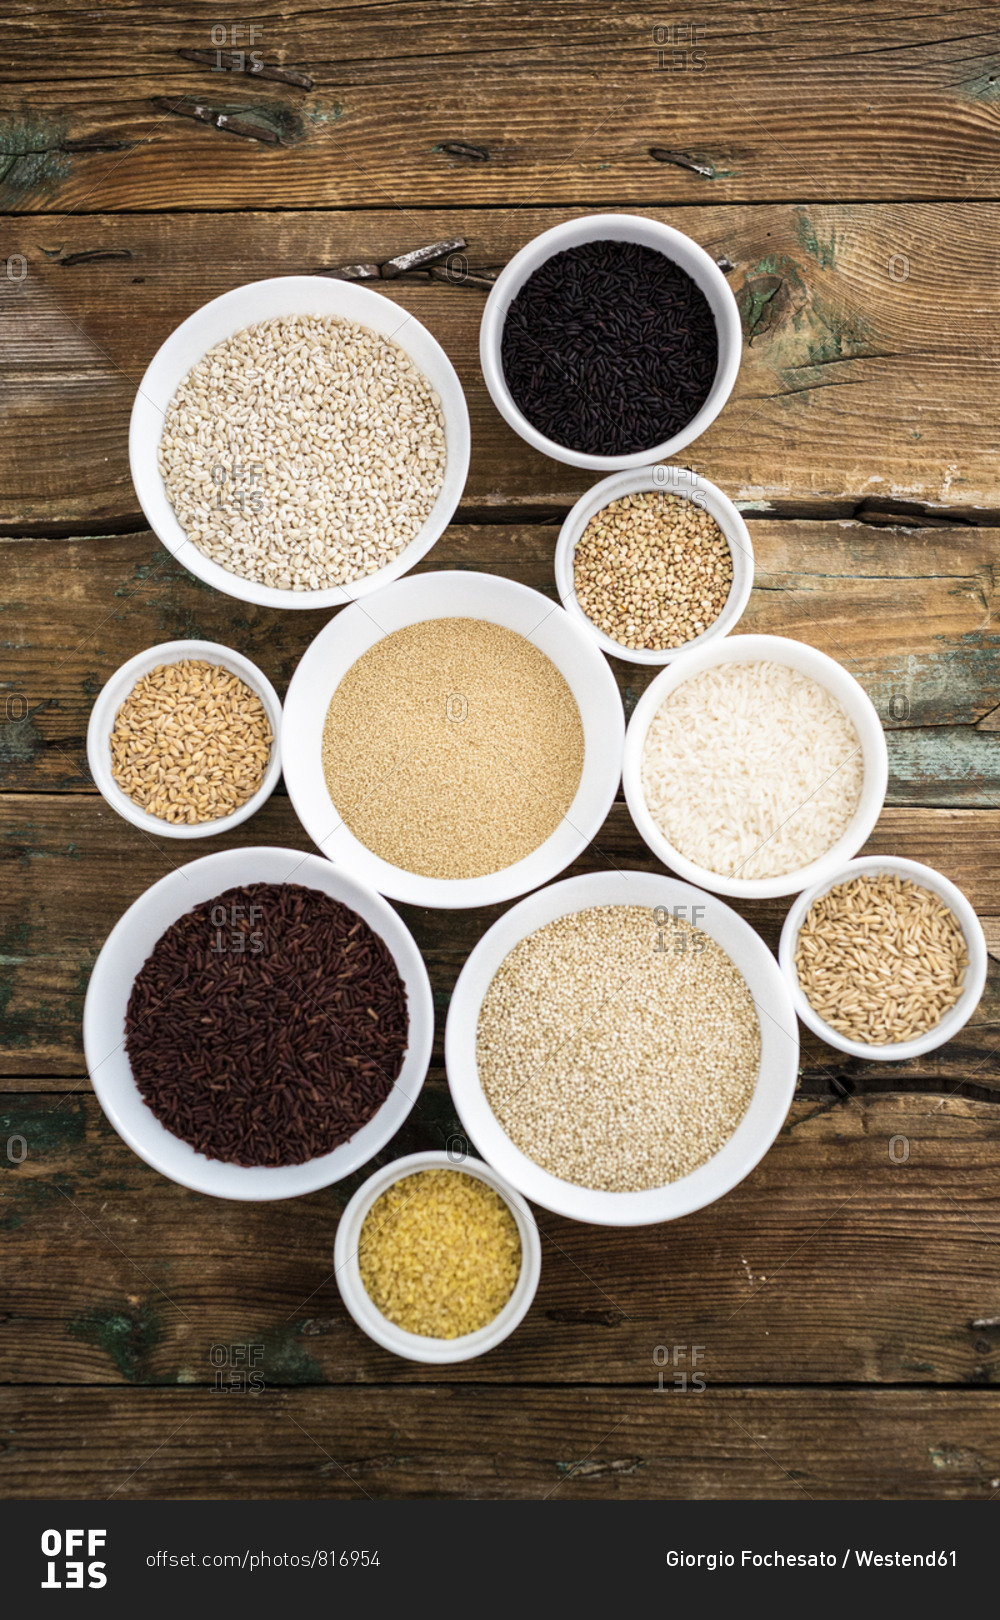 Cereal mix: black rice- red rice- barley- amaranth- quinoa- rice- bulgur- spelt- oats and buckwheat